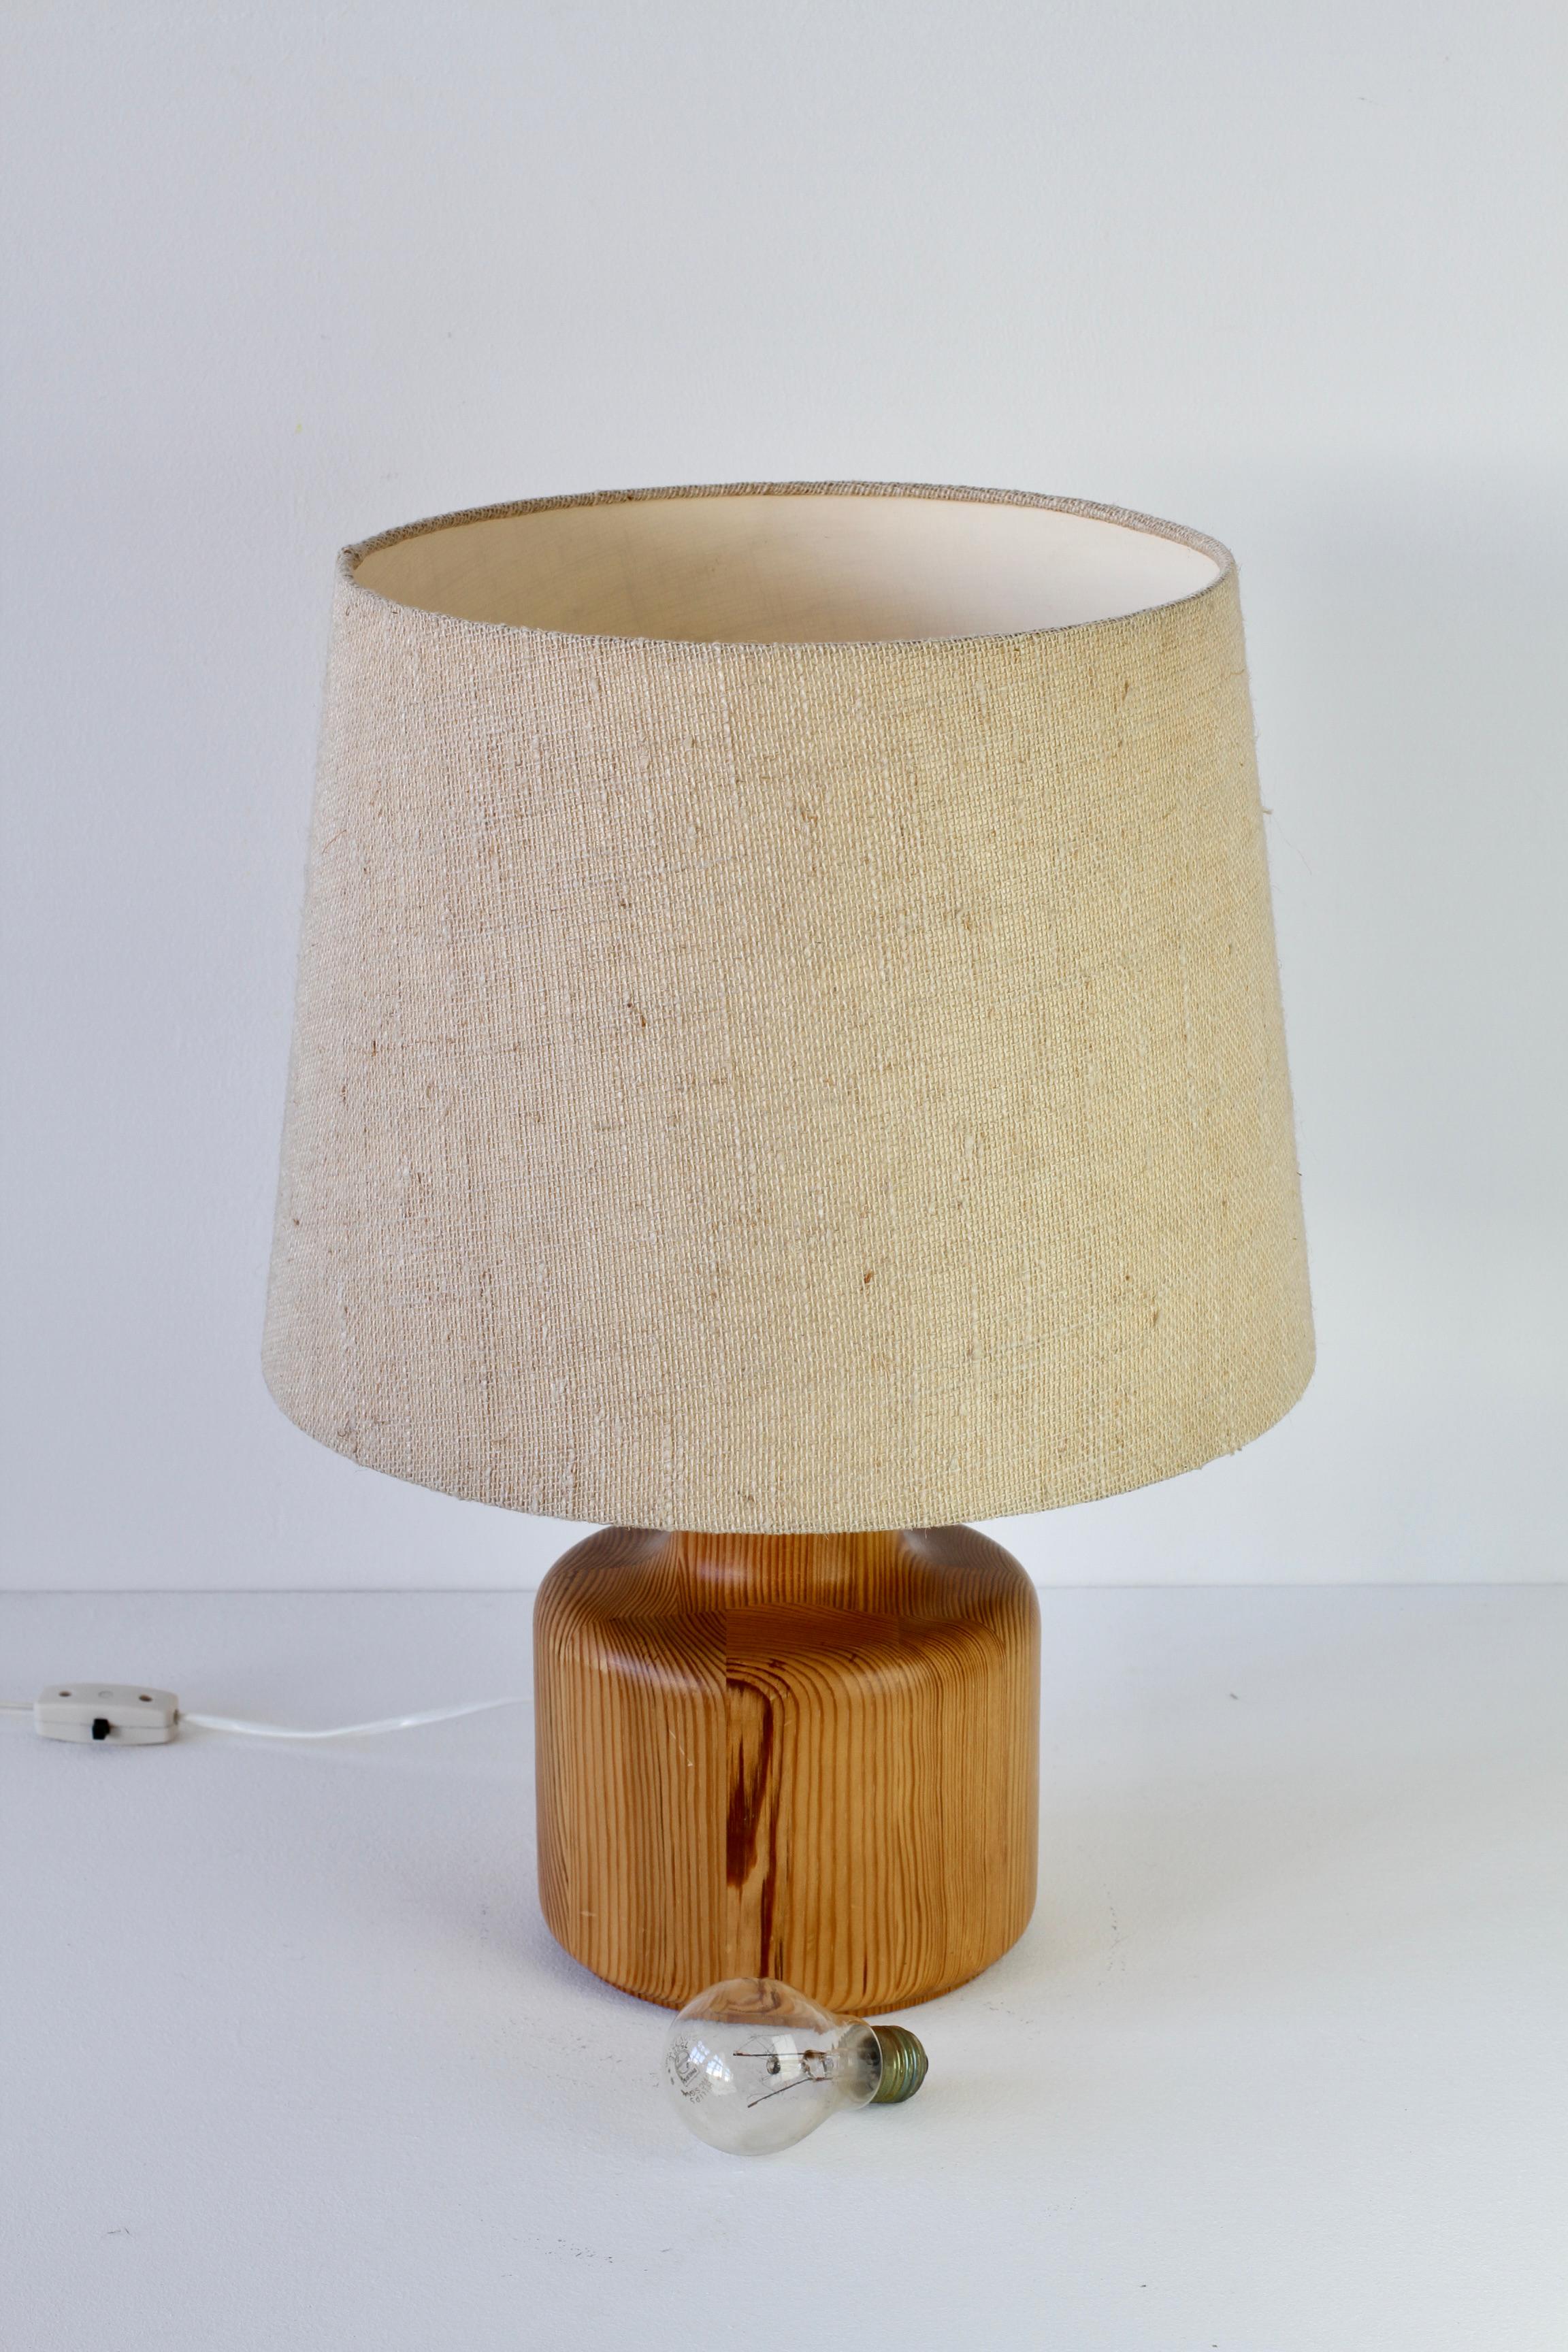 German 1970s Large Scandinavian Style Pine Wood Table Light Lamp Original Fabric Shade